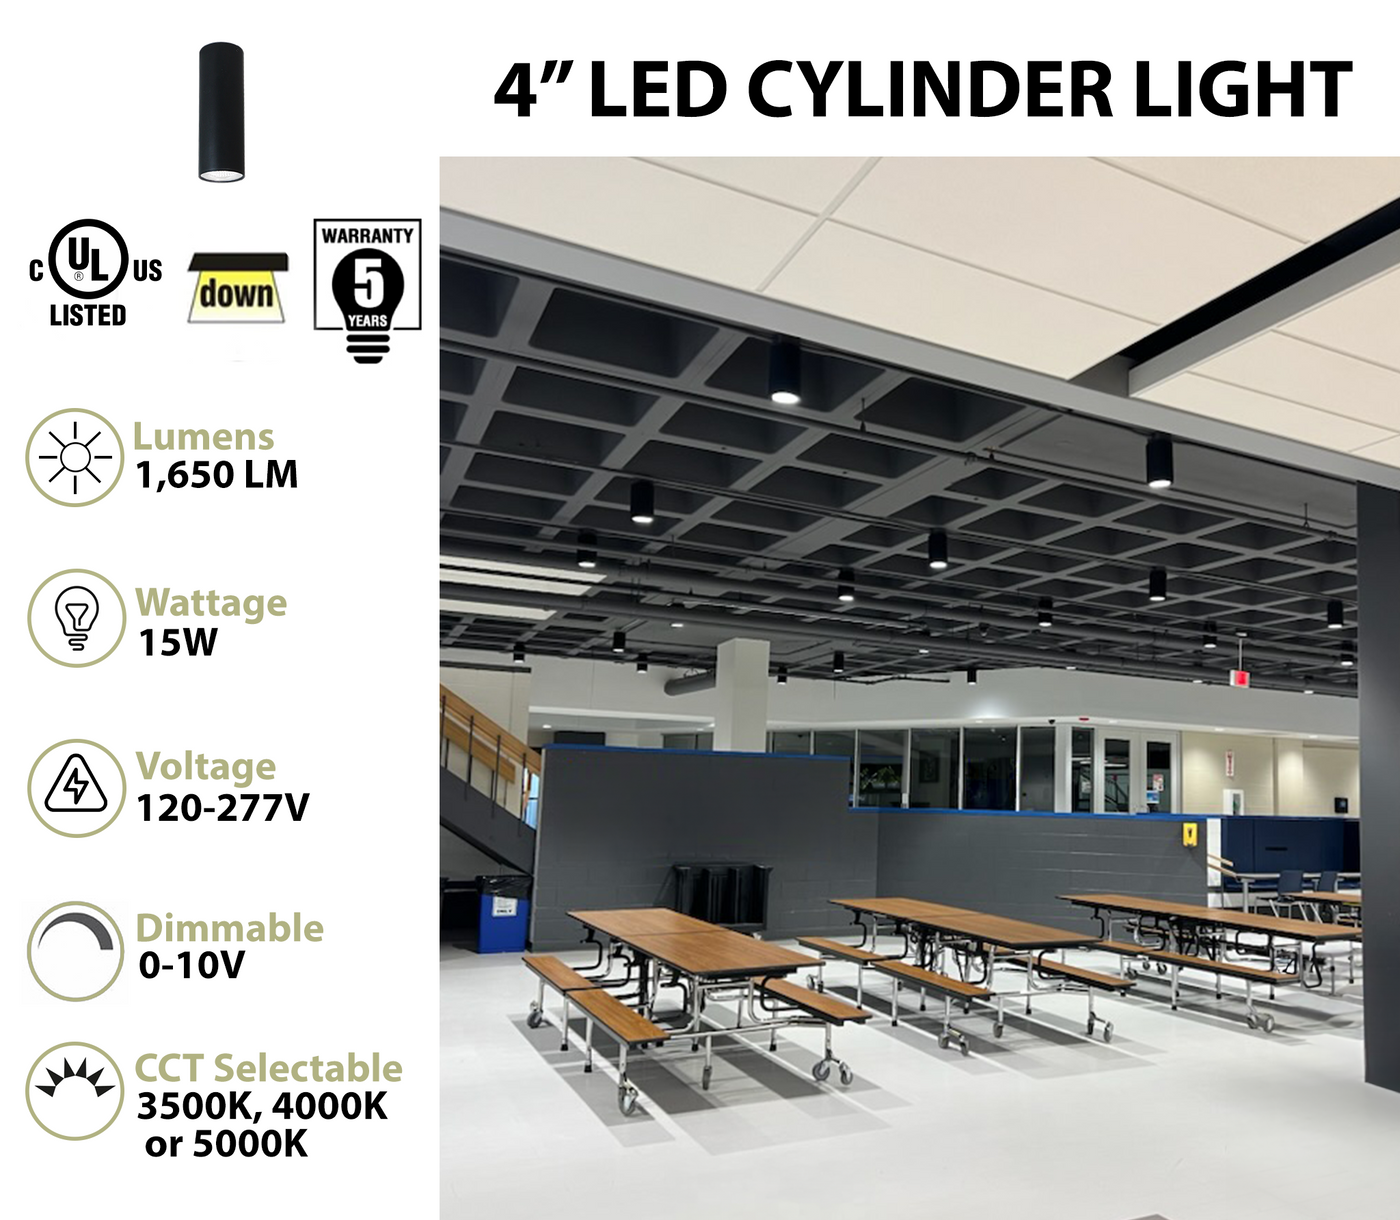 4" LED Architectural Cylinder Light Fixture, 1650 Lumens, 15W, CCT Selectable, 120-277V, Black Finish